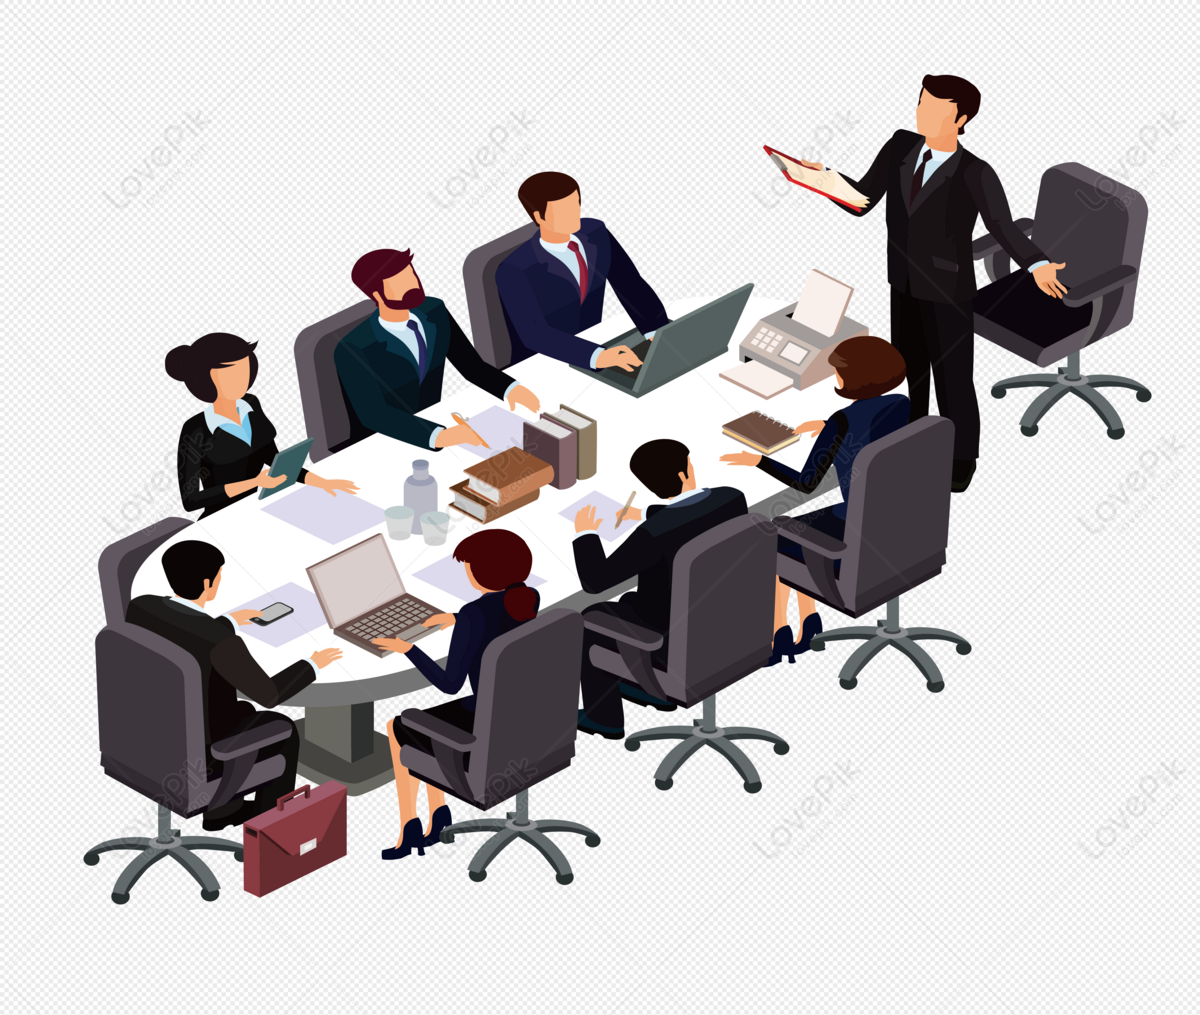 board meeting png